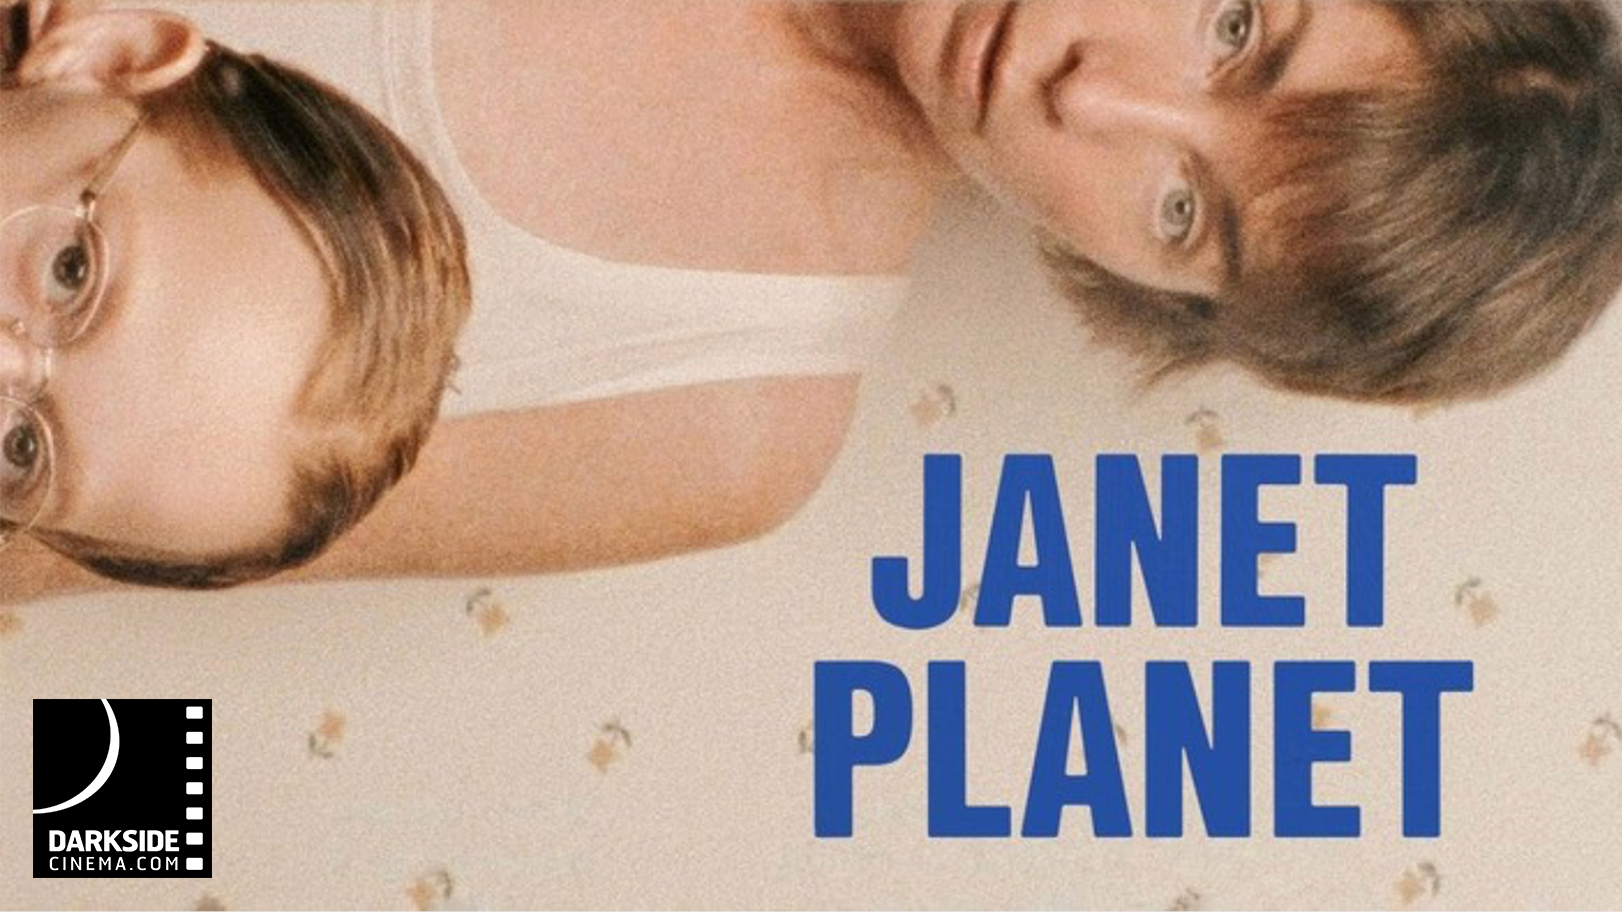 JANET PLANET